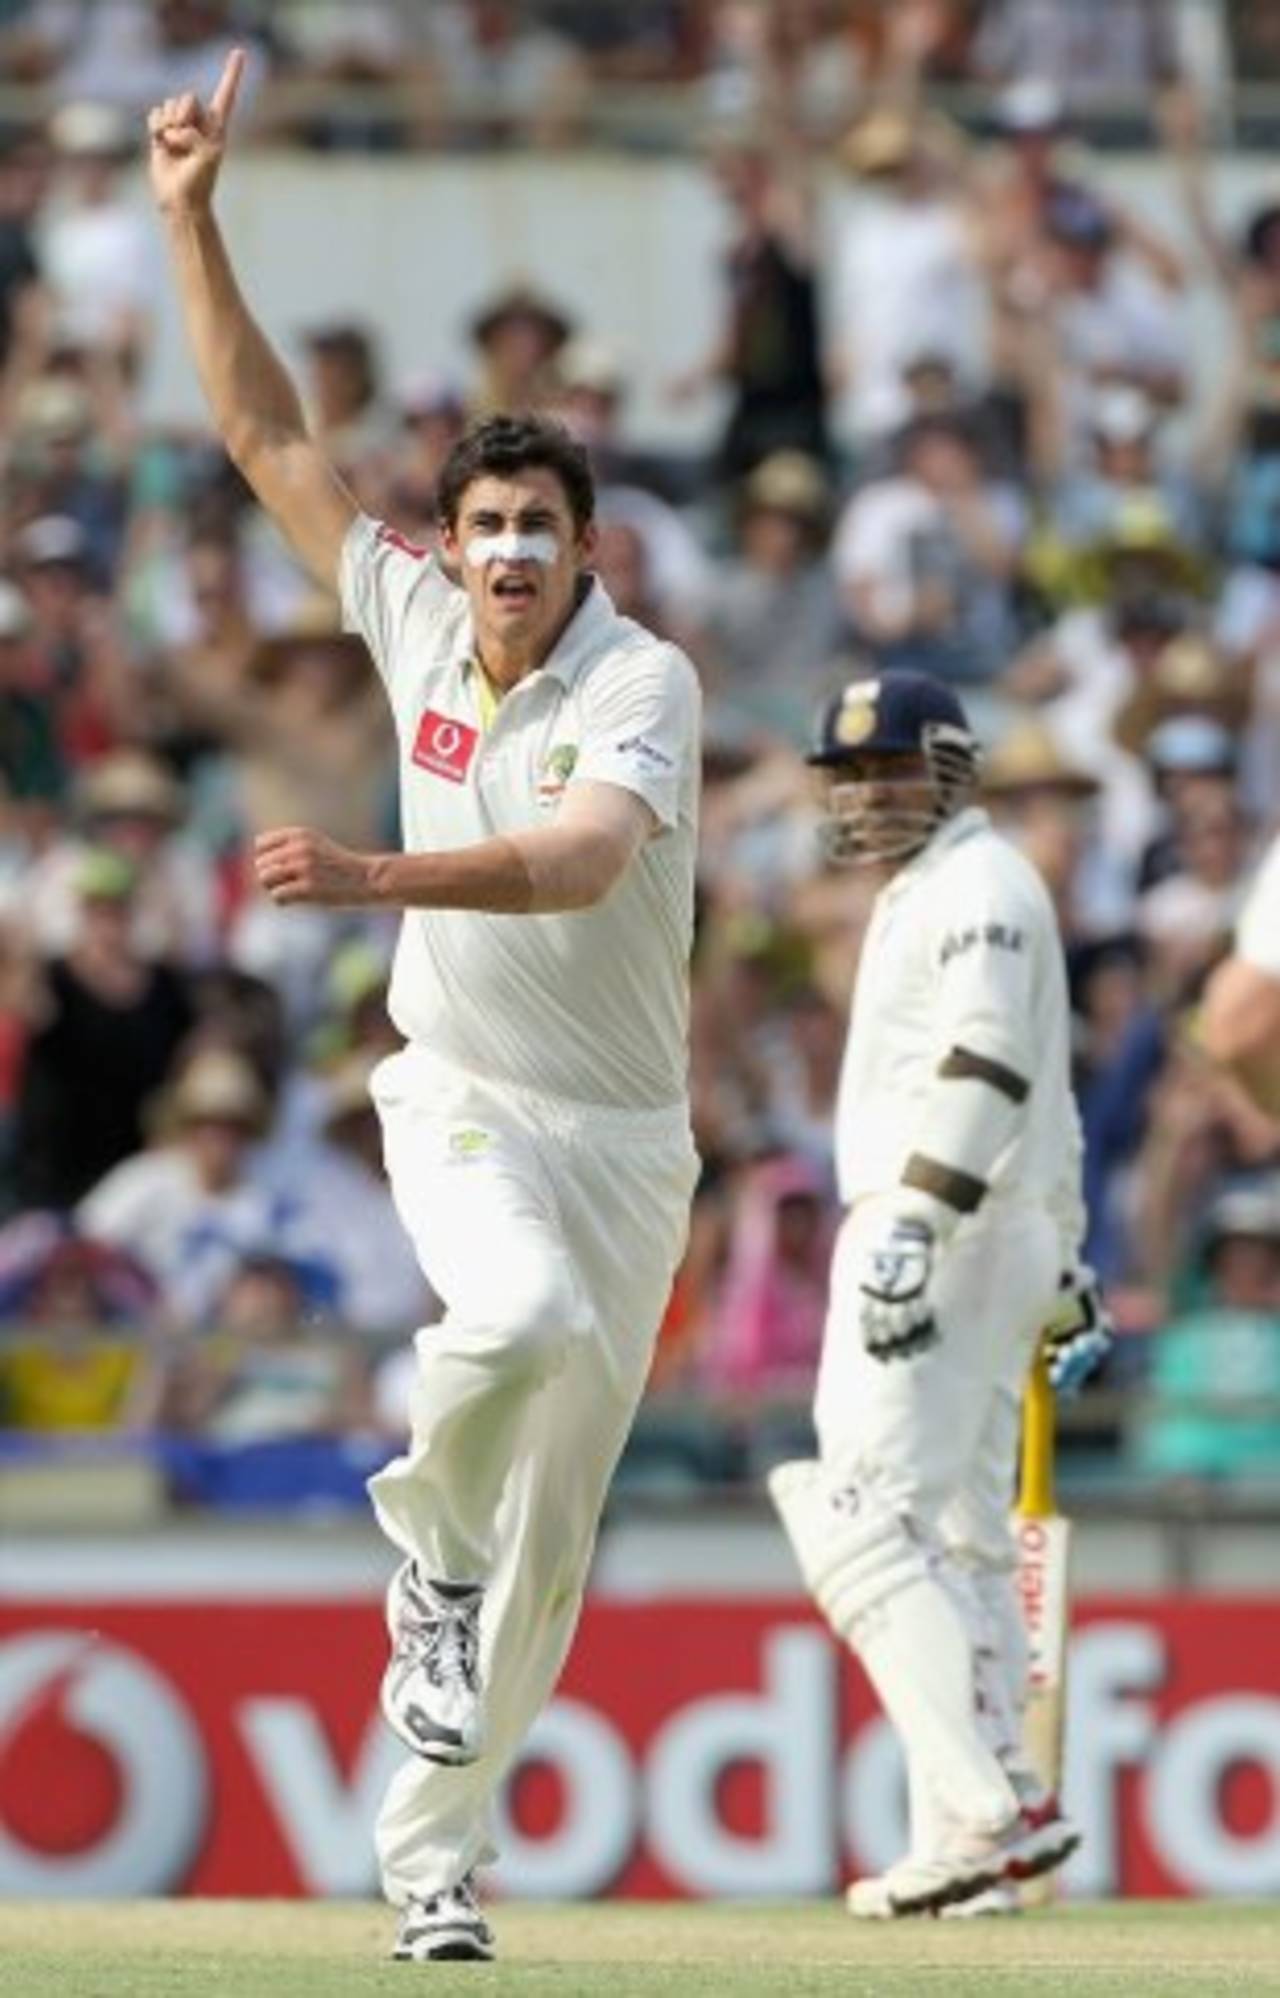 Mitchell Starc had Gautam Gambhir caught off a sharp bouncer, Australia v India, 3rd Test, Perth, 2nd day, January 14, 2012